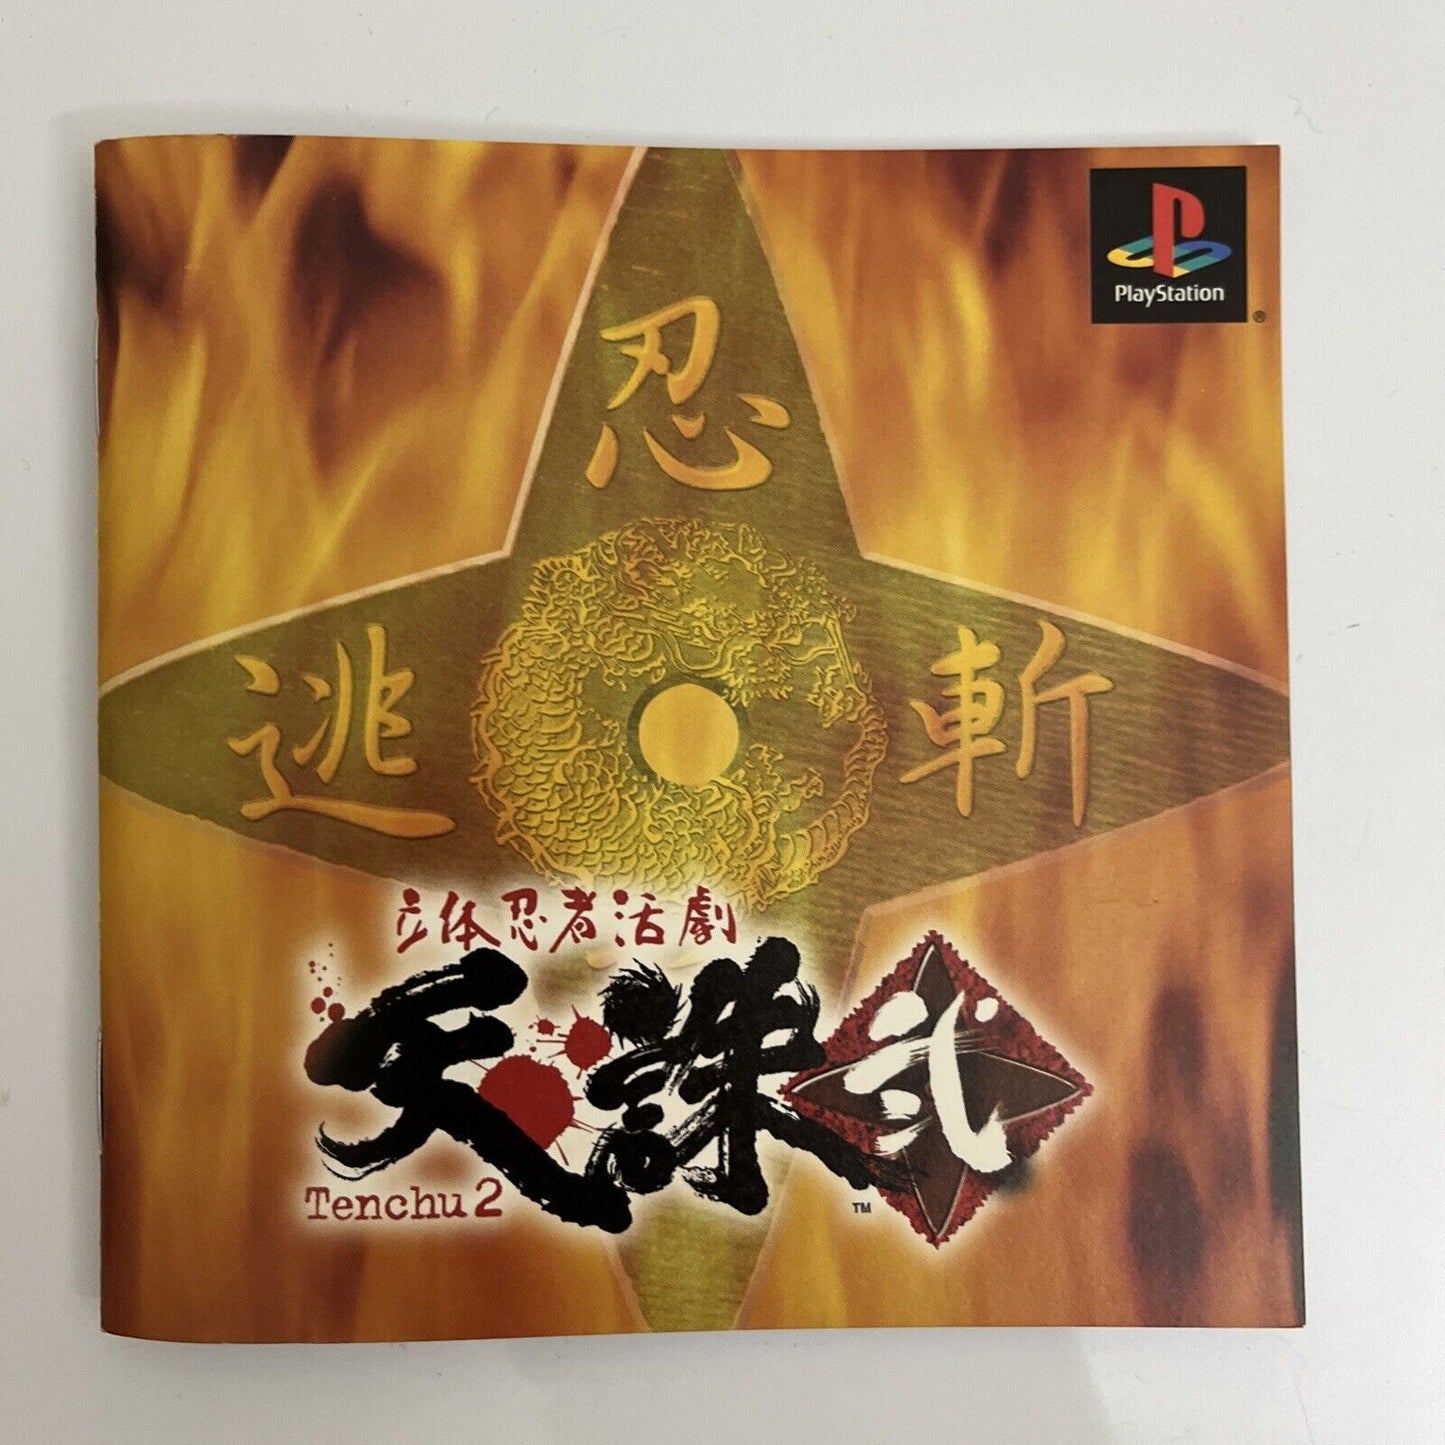 Tenchu 2 - Sony PlayStation PS1 NTSC-J JAPAN 2000 Ninja Assassin Game